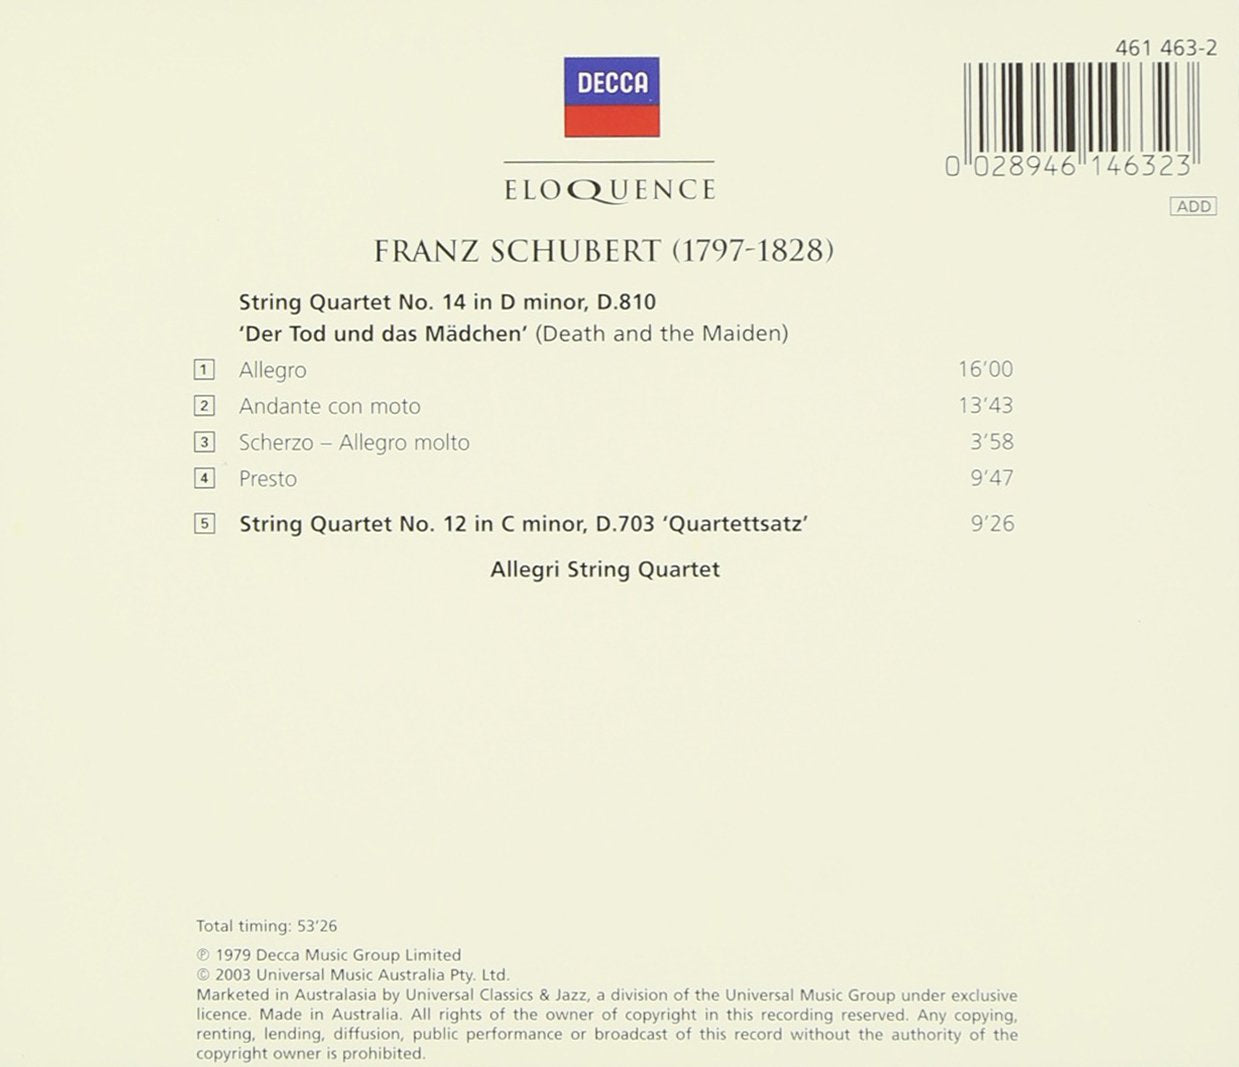 SCHUBERT: String Quartet No. 14 "Death and the Maiden", String Quartet No. 12 "Quartettsatz" - Allegri Quartet